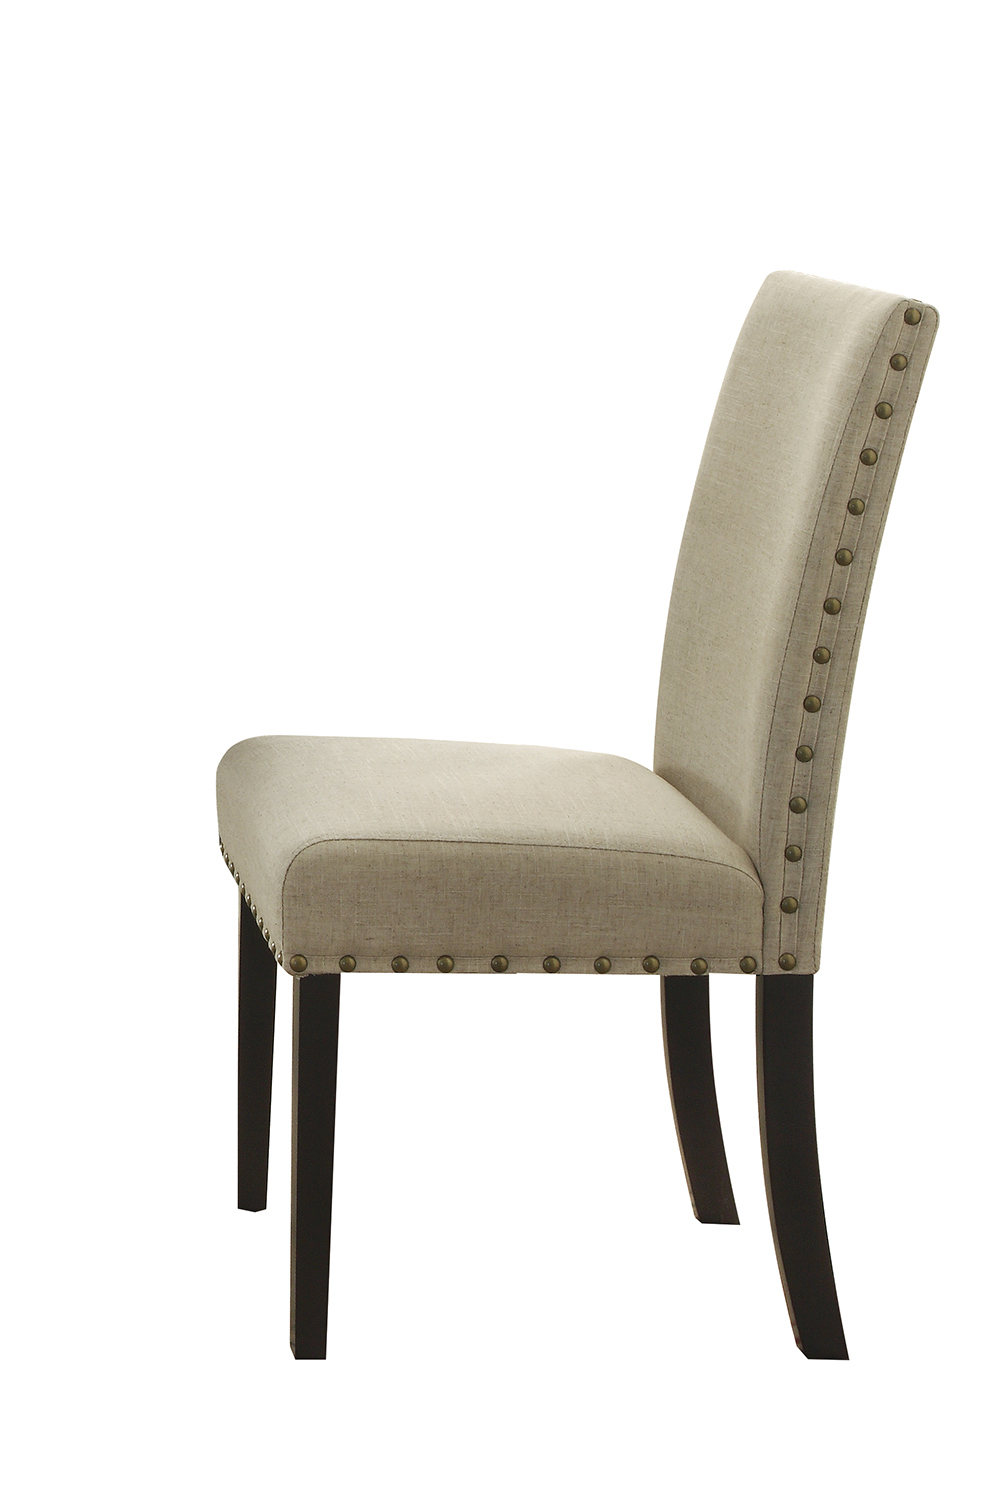 Acme Hadas Side Chair - Beige Fabric